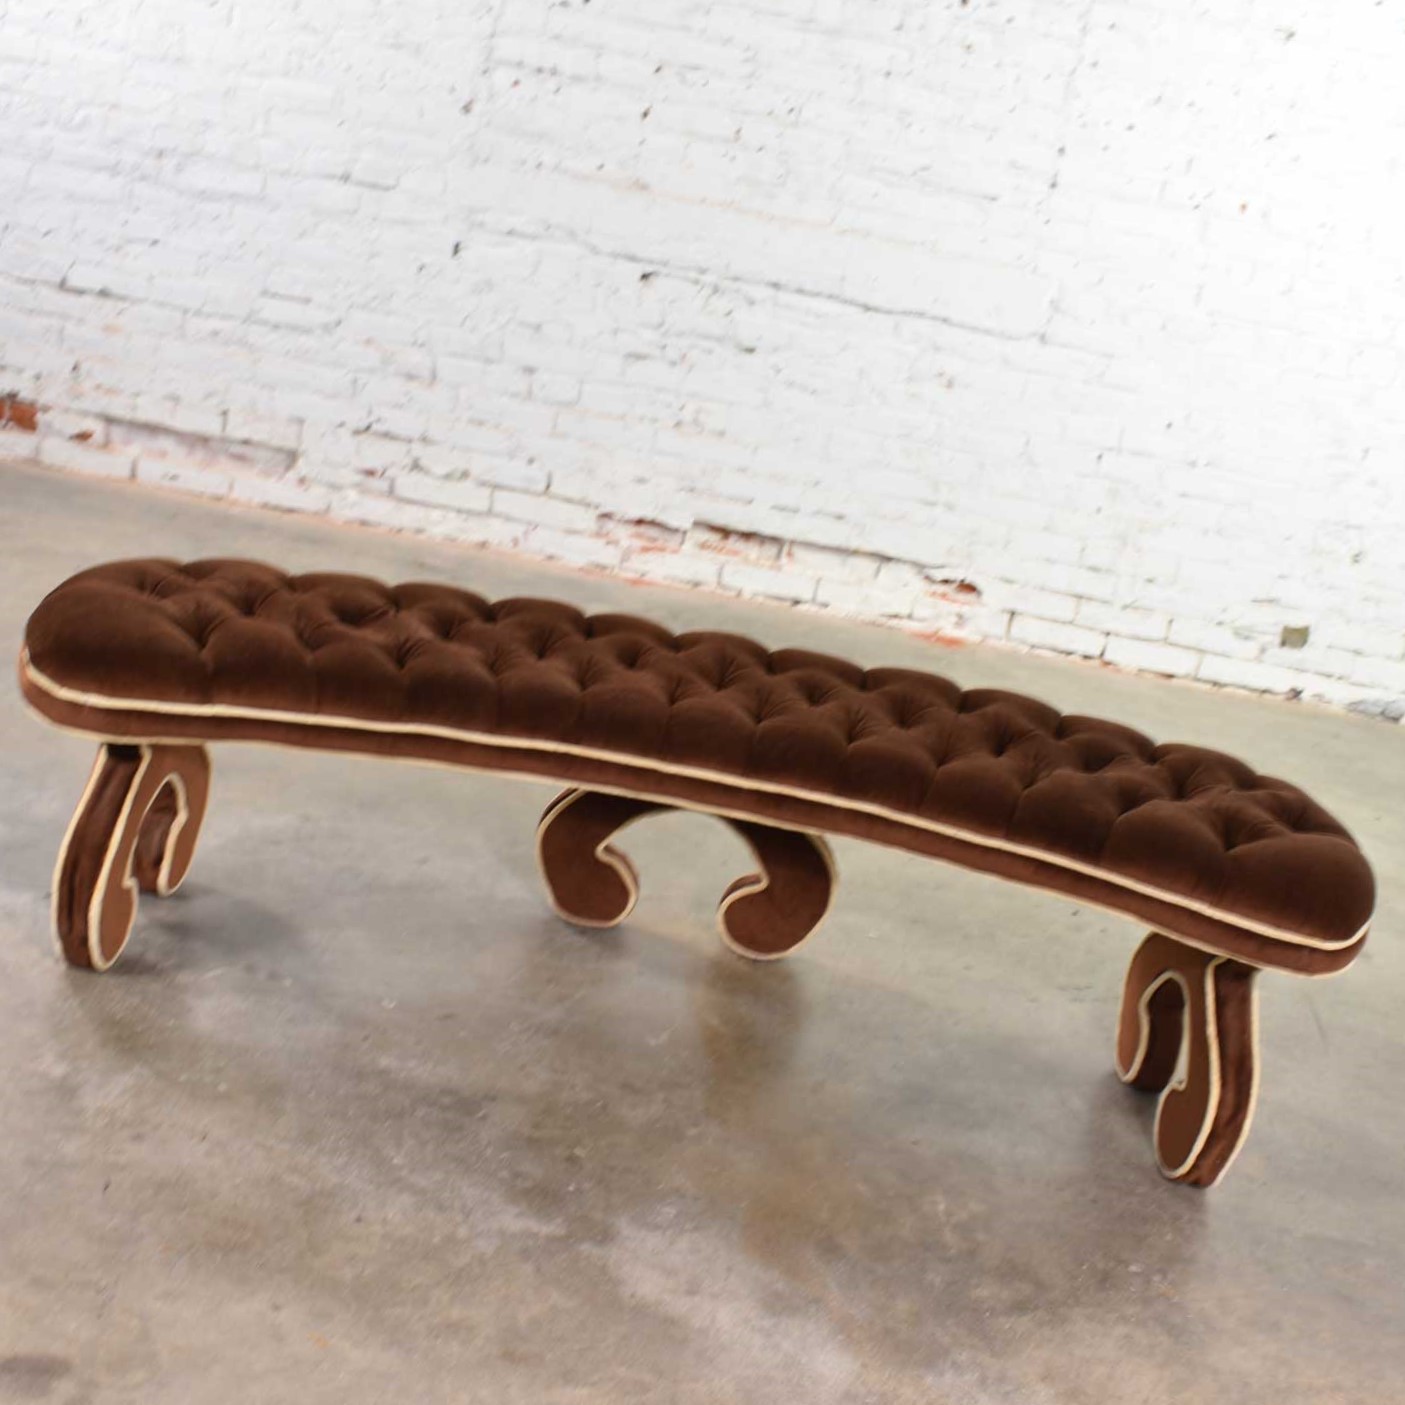 Hollywood Regency Curved Bench Fully Upholstered & Tufted in Cocoa Brown Velvet